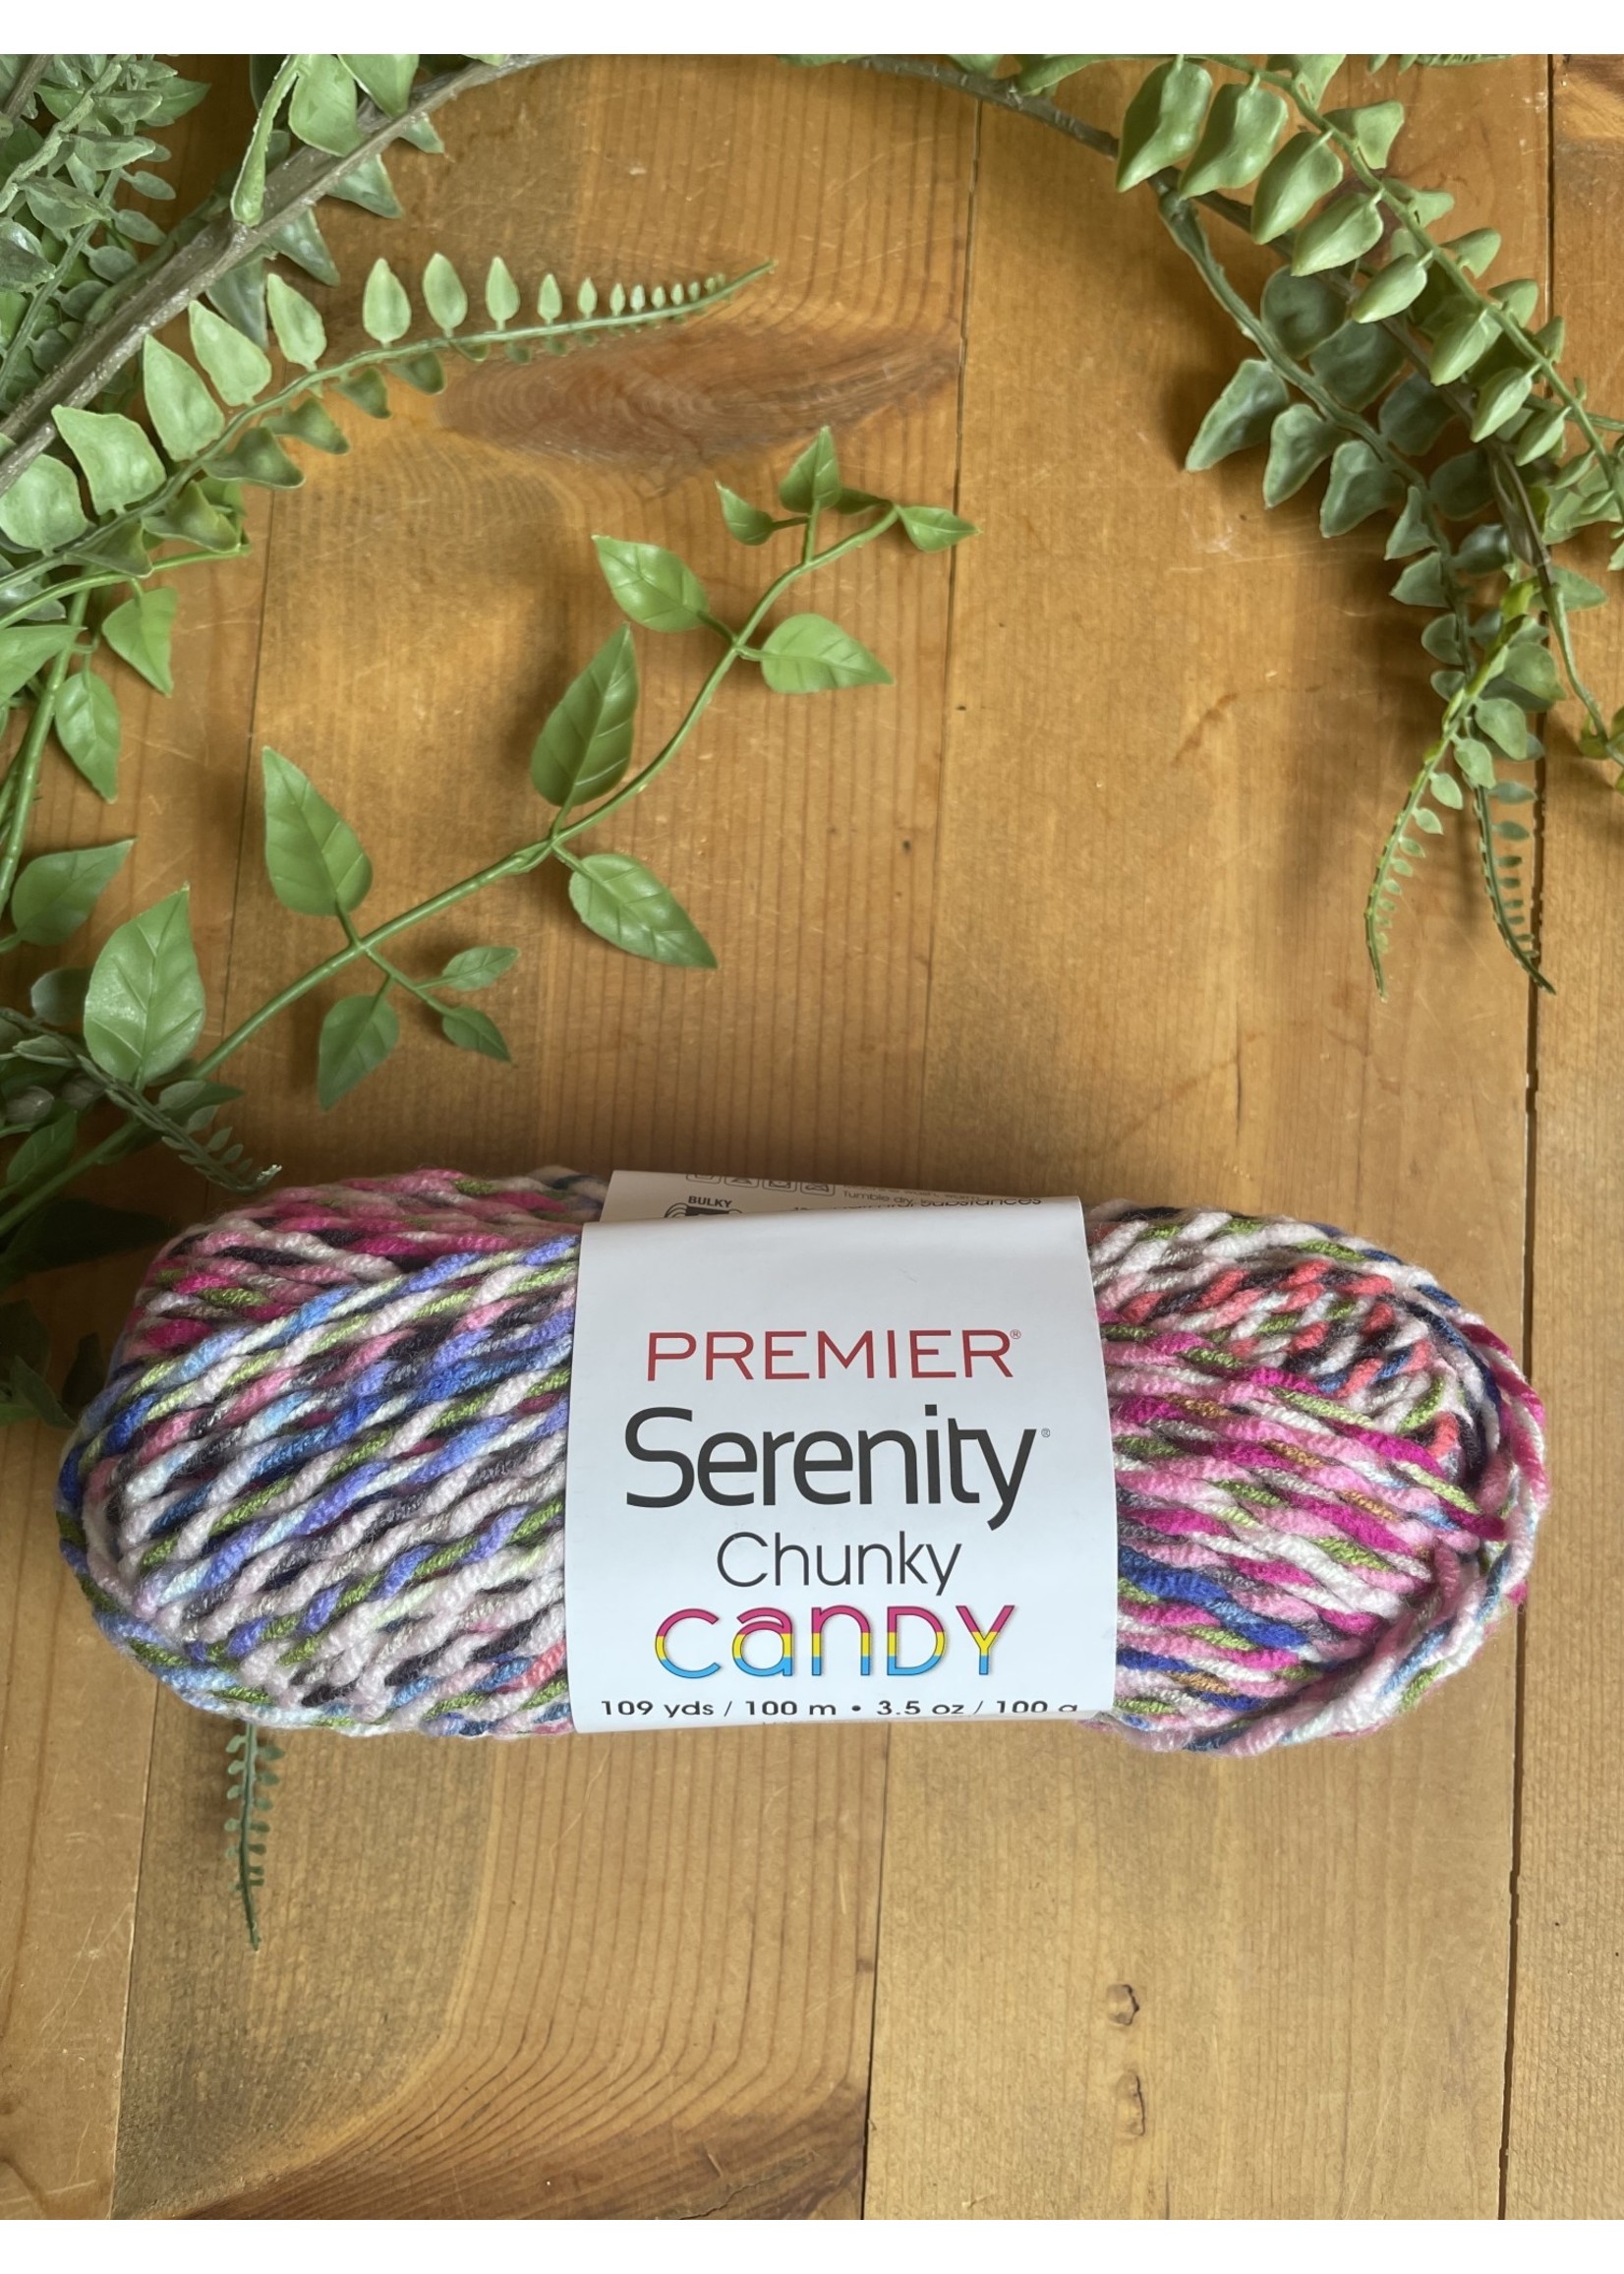 Premier Serenity Chunky Candy Yarn